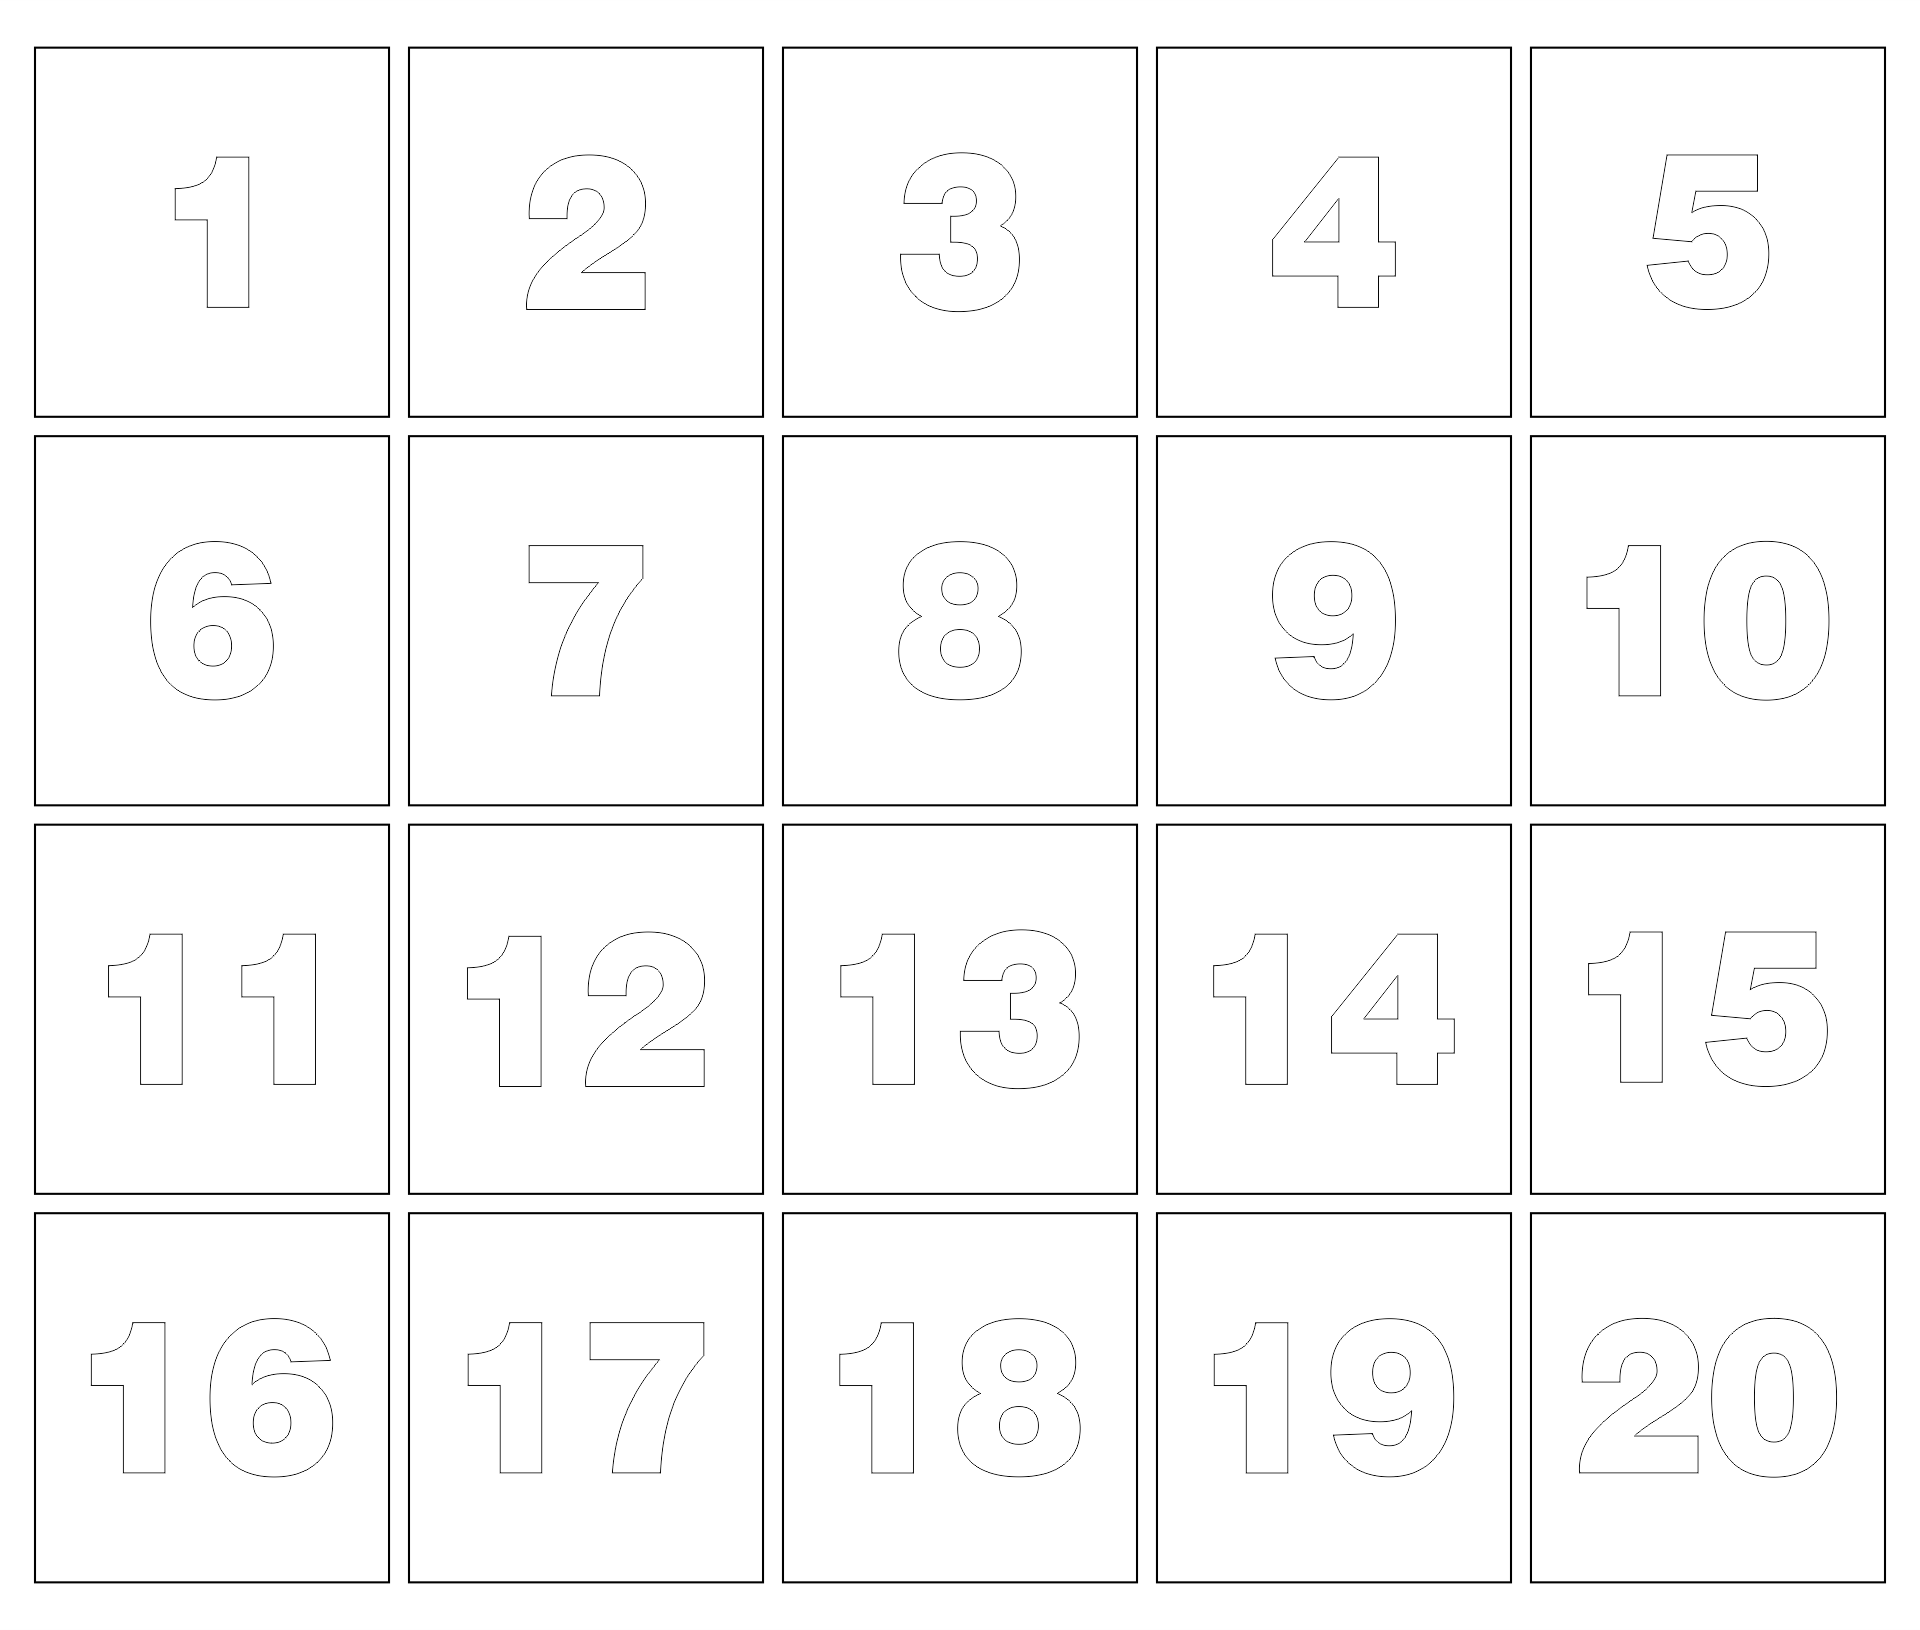 10-best-large-printable-number-cards-1-20-pdf-for-free-at-printablee